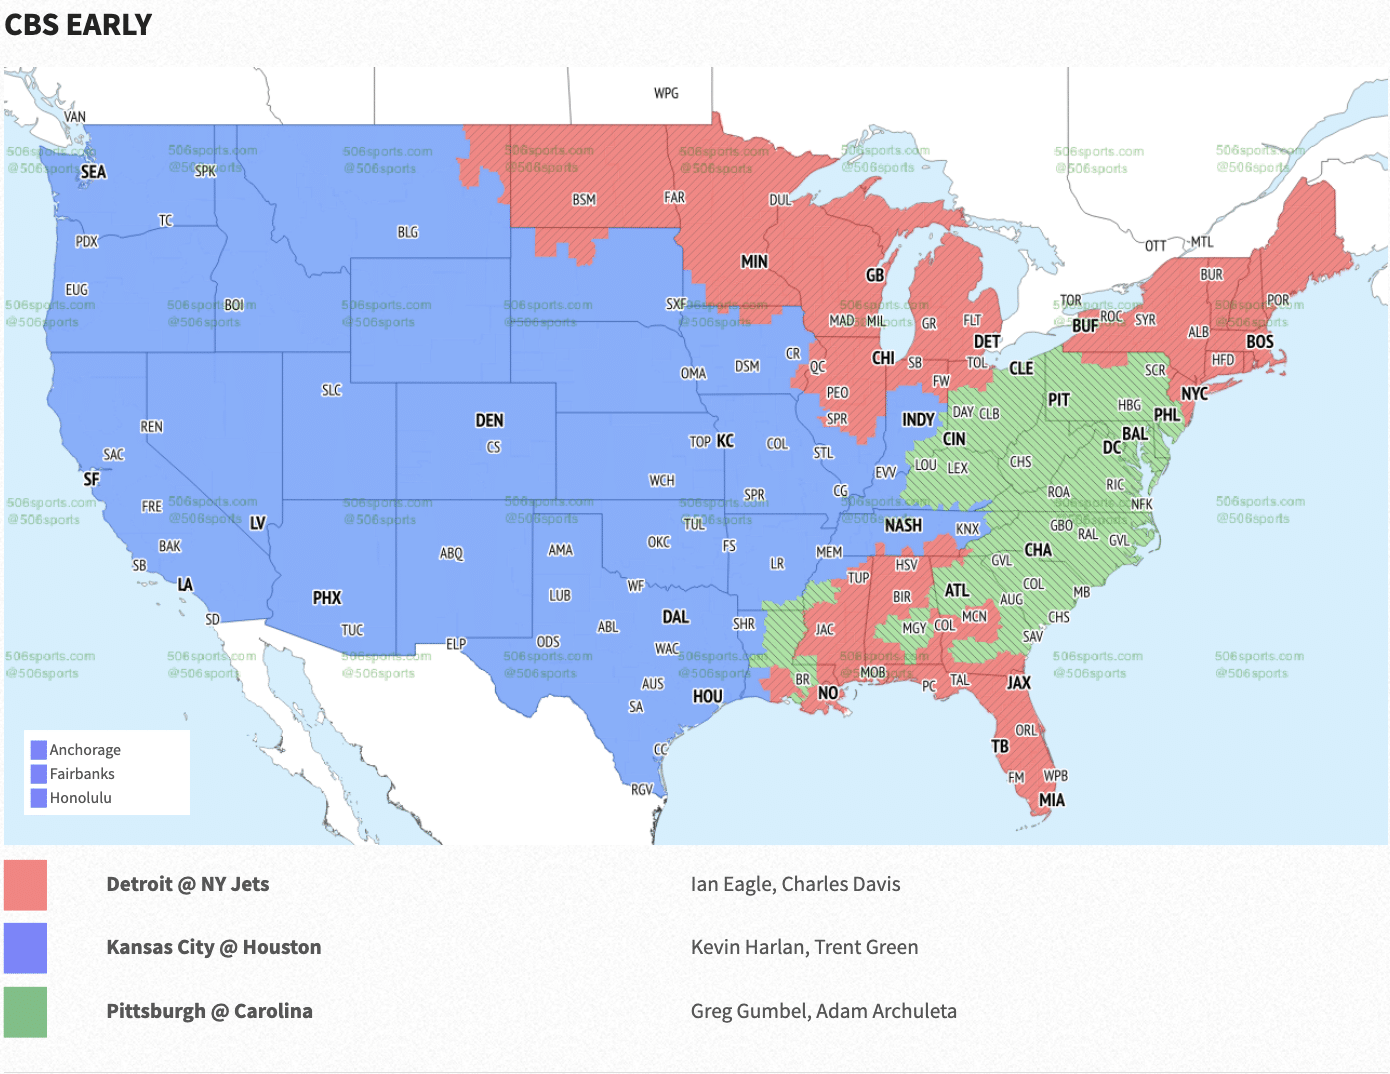 NFL Week 15 Coverage Maps